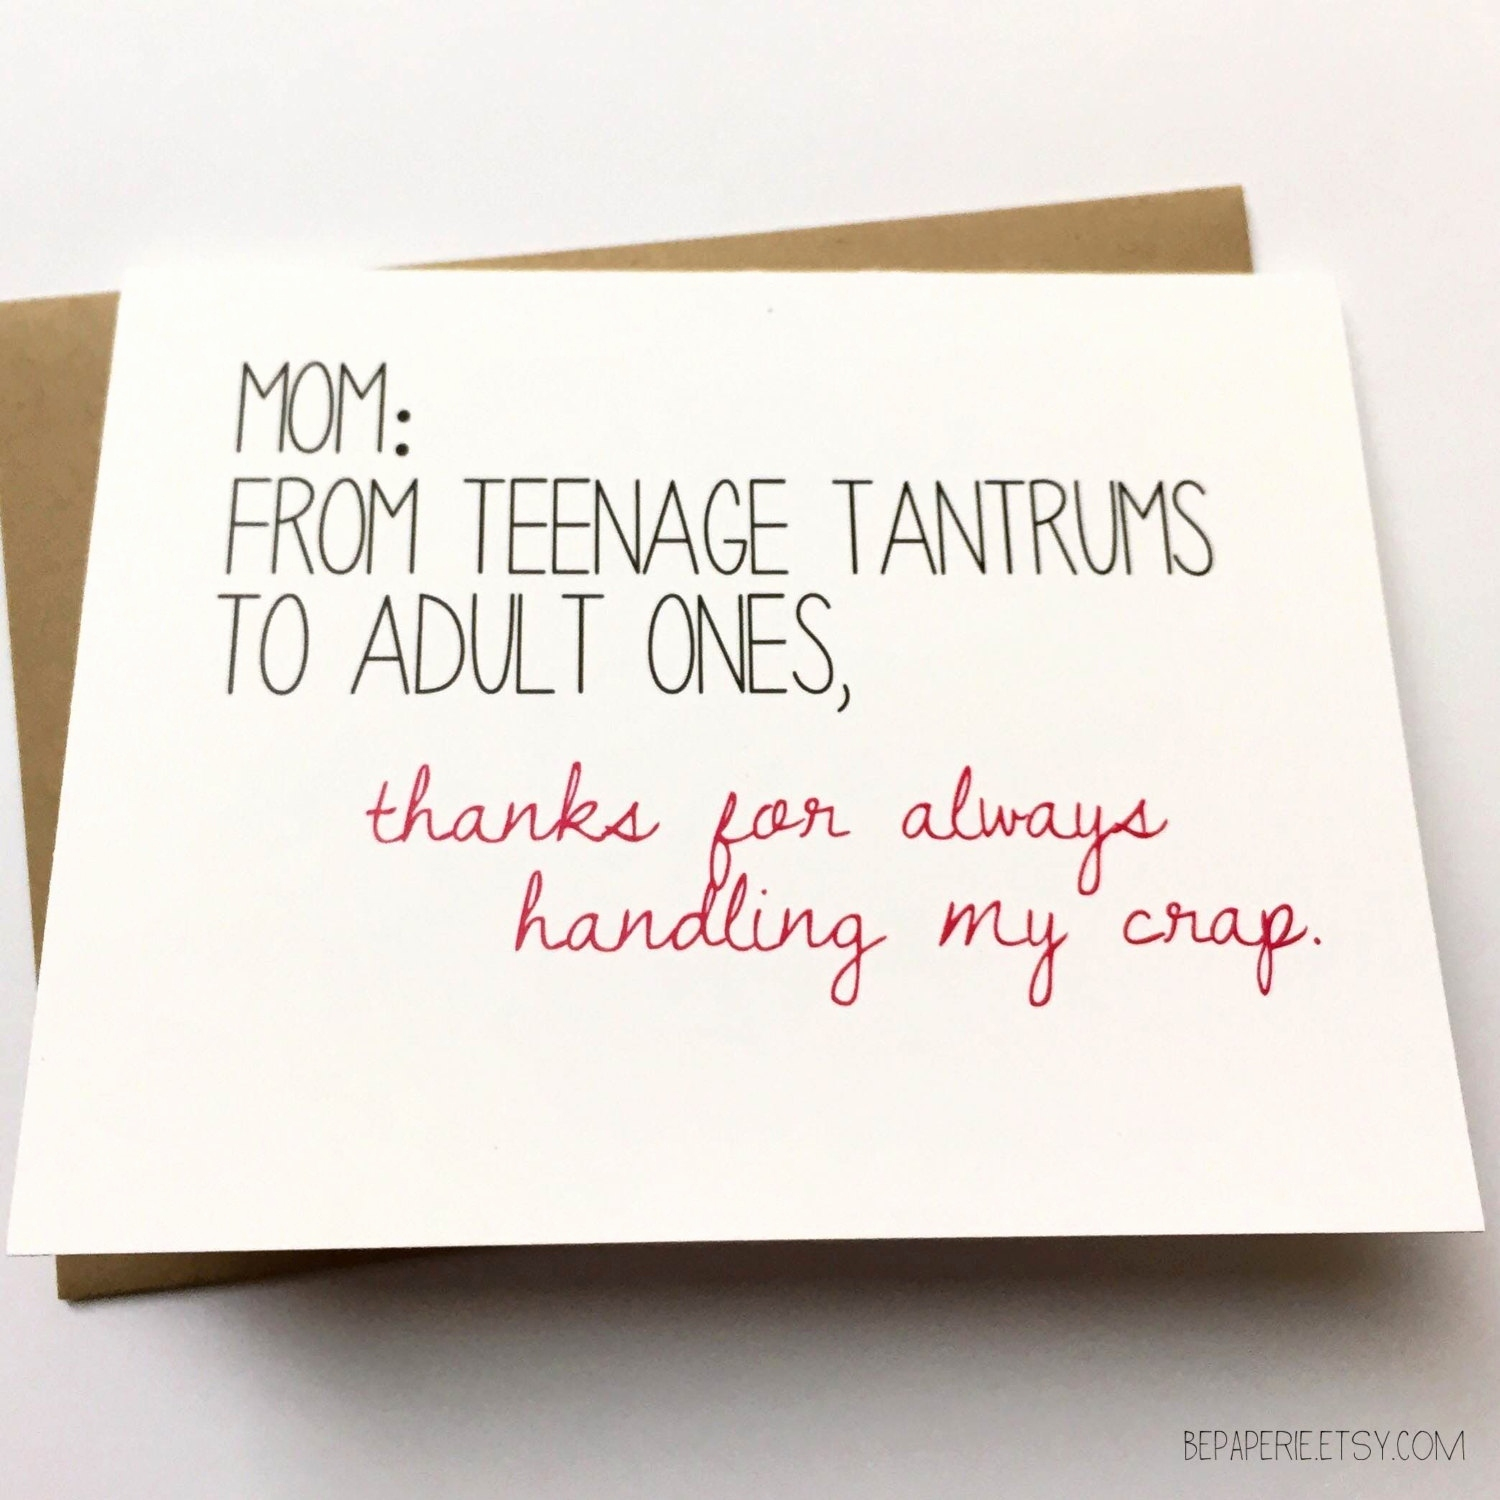 Funny Birthday Card Ideas For Mom Funny Birthday Card Ideas For Mom Cardfssn